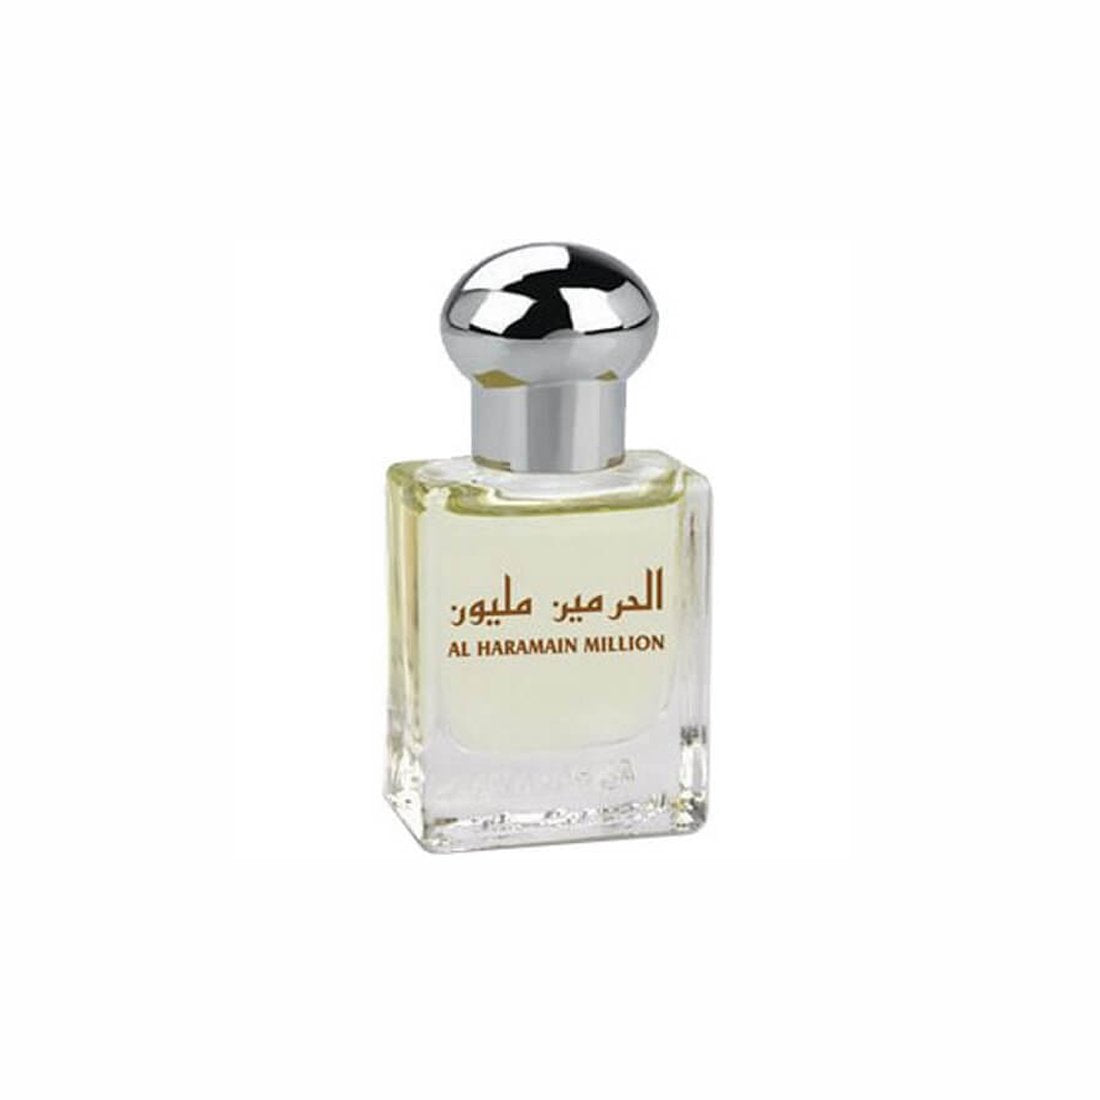 Al Haramain Million Fragrance Pure Original Roll on Perfume Oil (Attar) - 15 ml